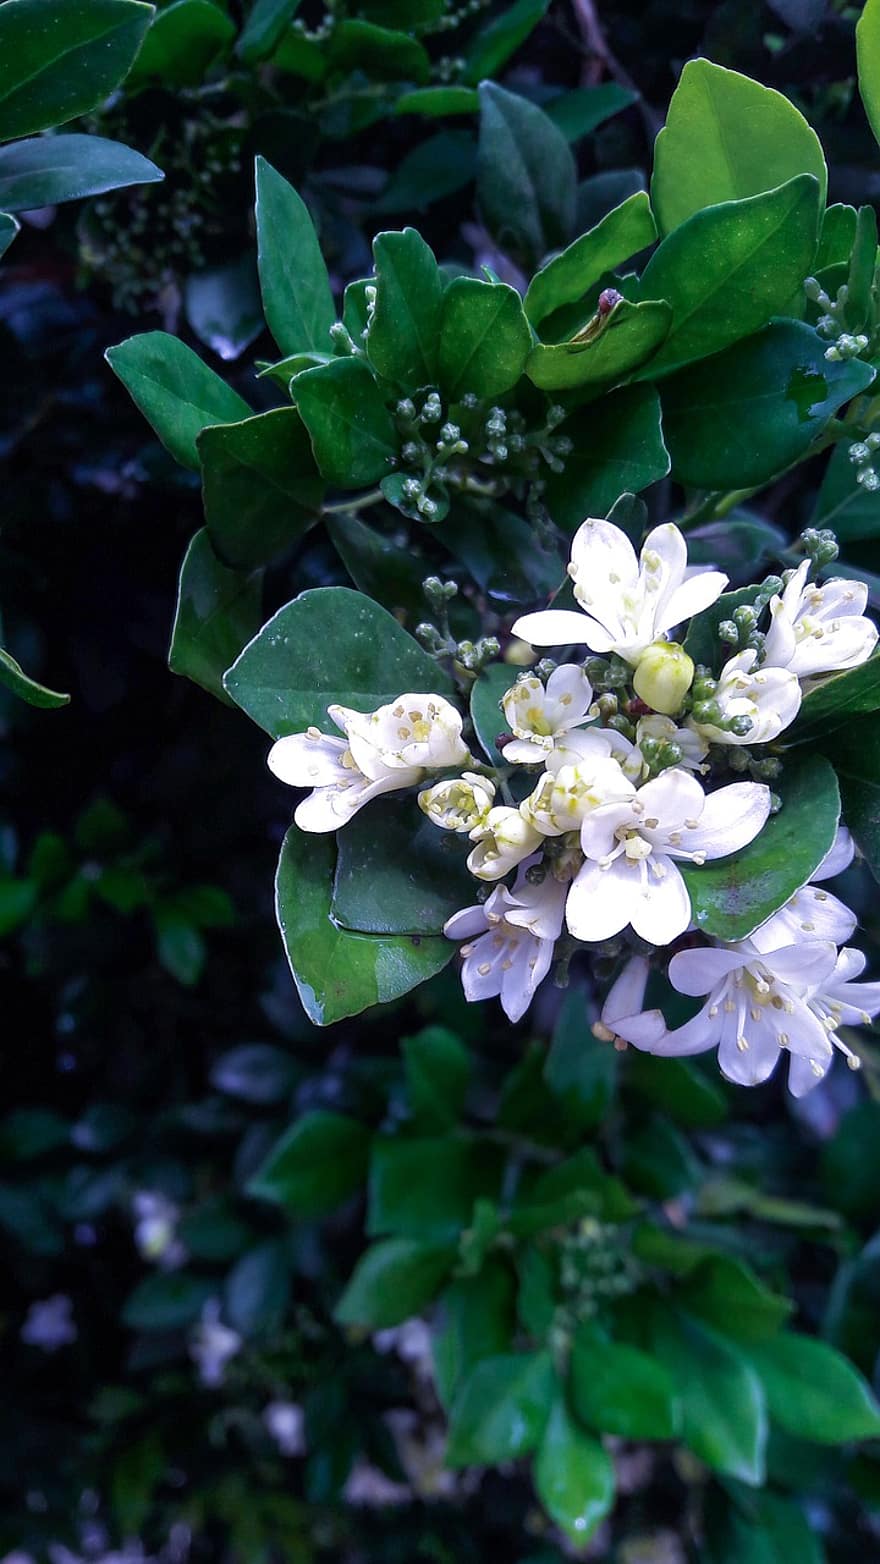 Jasmine, Flowers, Plant, White Flowers, Petals, Buds, Bloom, Leaves, Nature